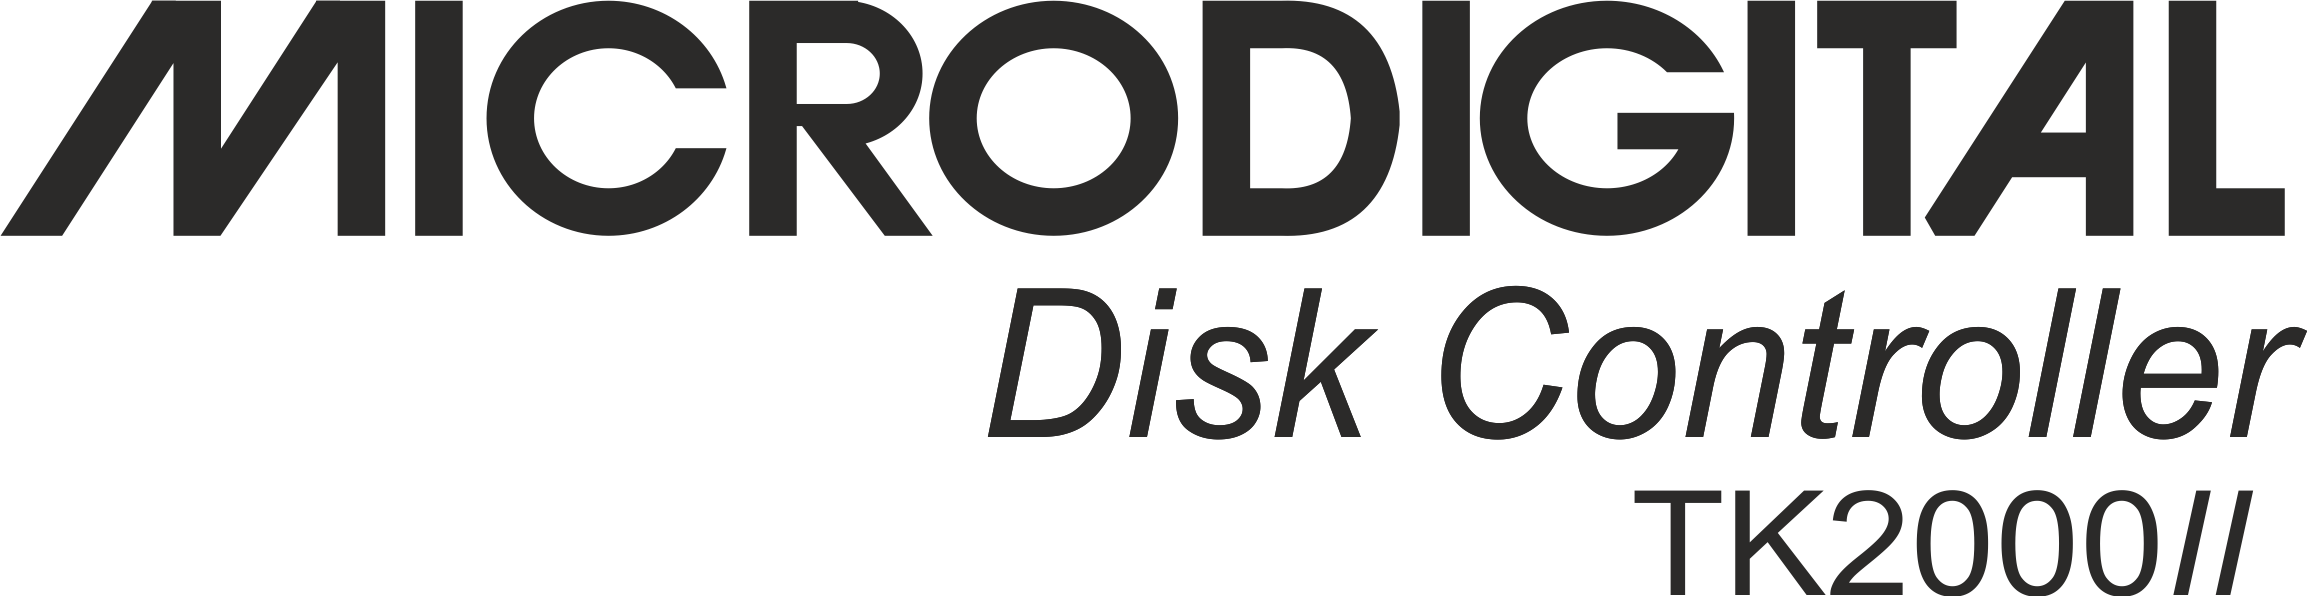 Microdigital Disk Controller: logo